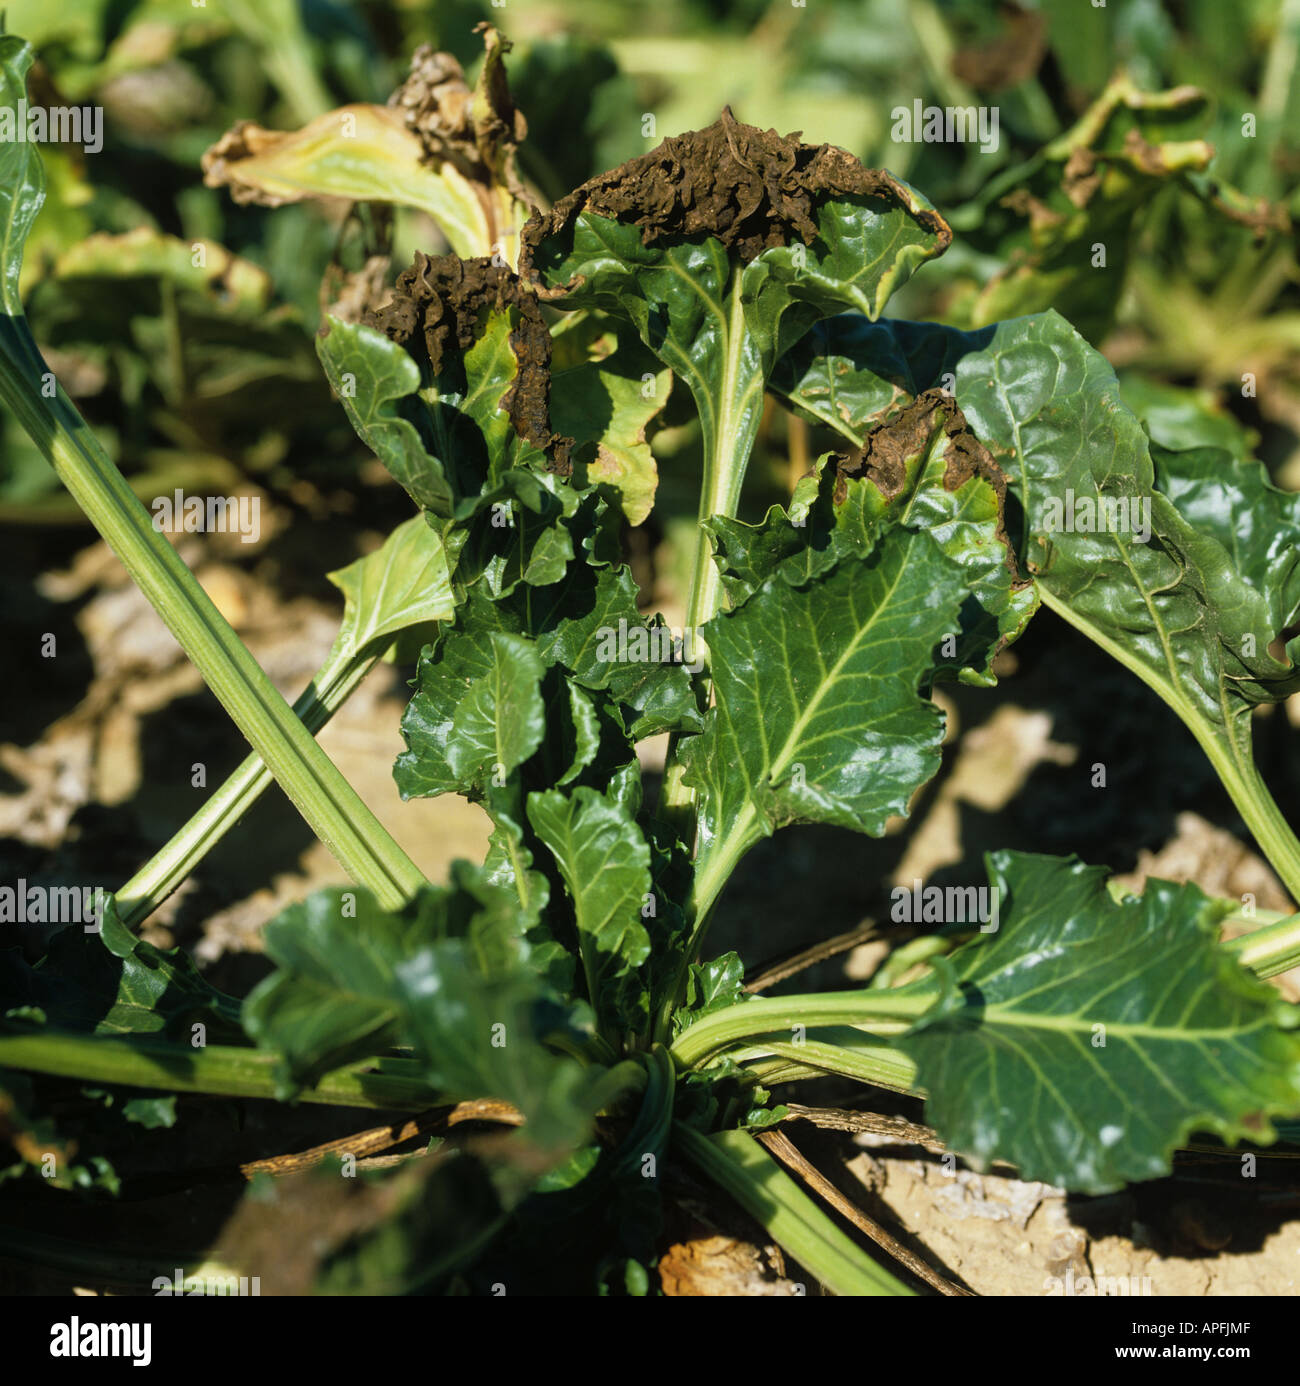 Alternaria leaf spot Alternaria tenuis lesions of weak pathogen on sugar beet leaf Stock Photo